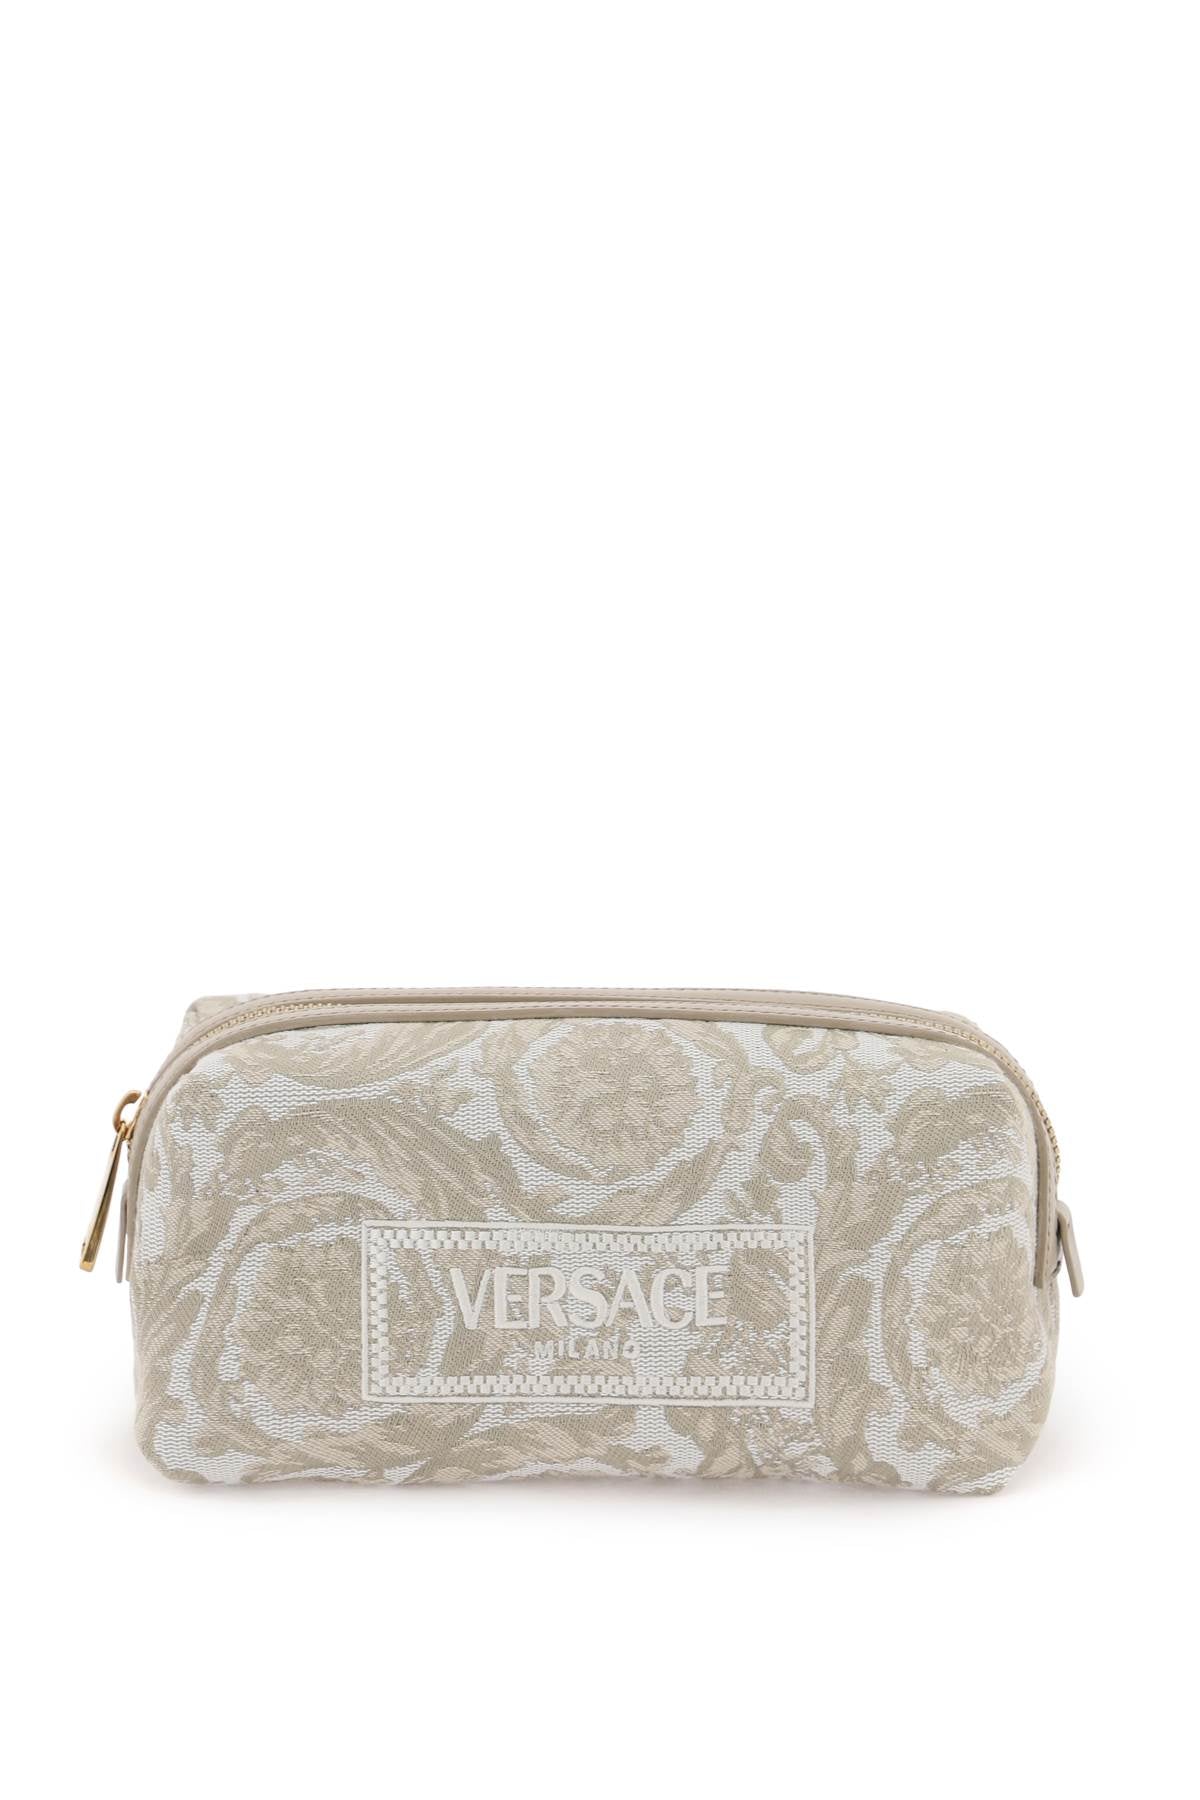 Versace barocco 化妝包 1013925 1A09741 米色 米色 VERSACE 金色